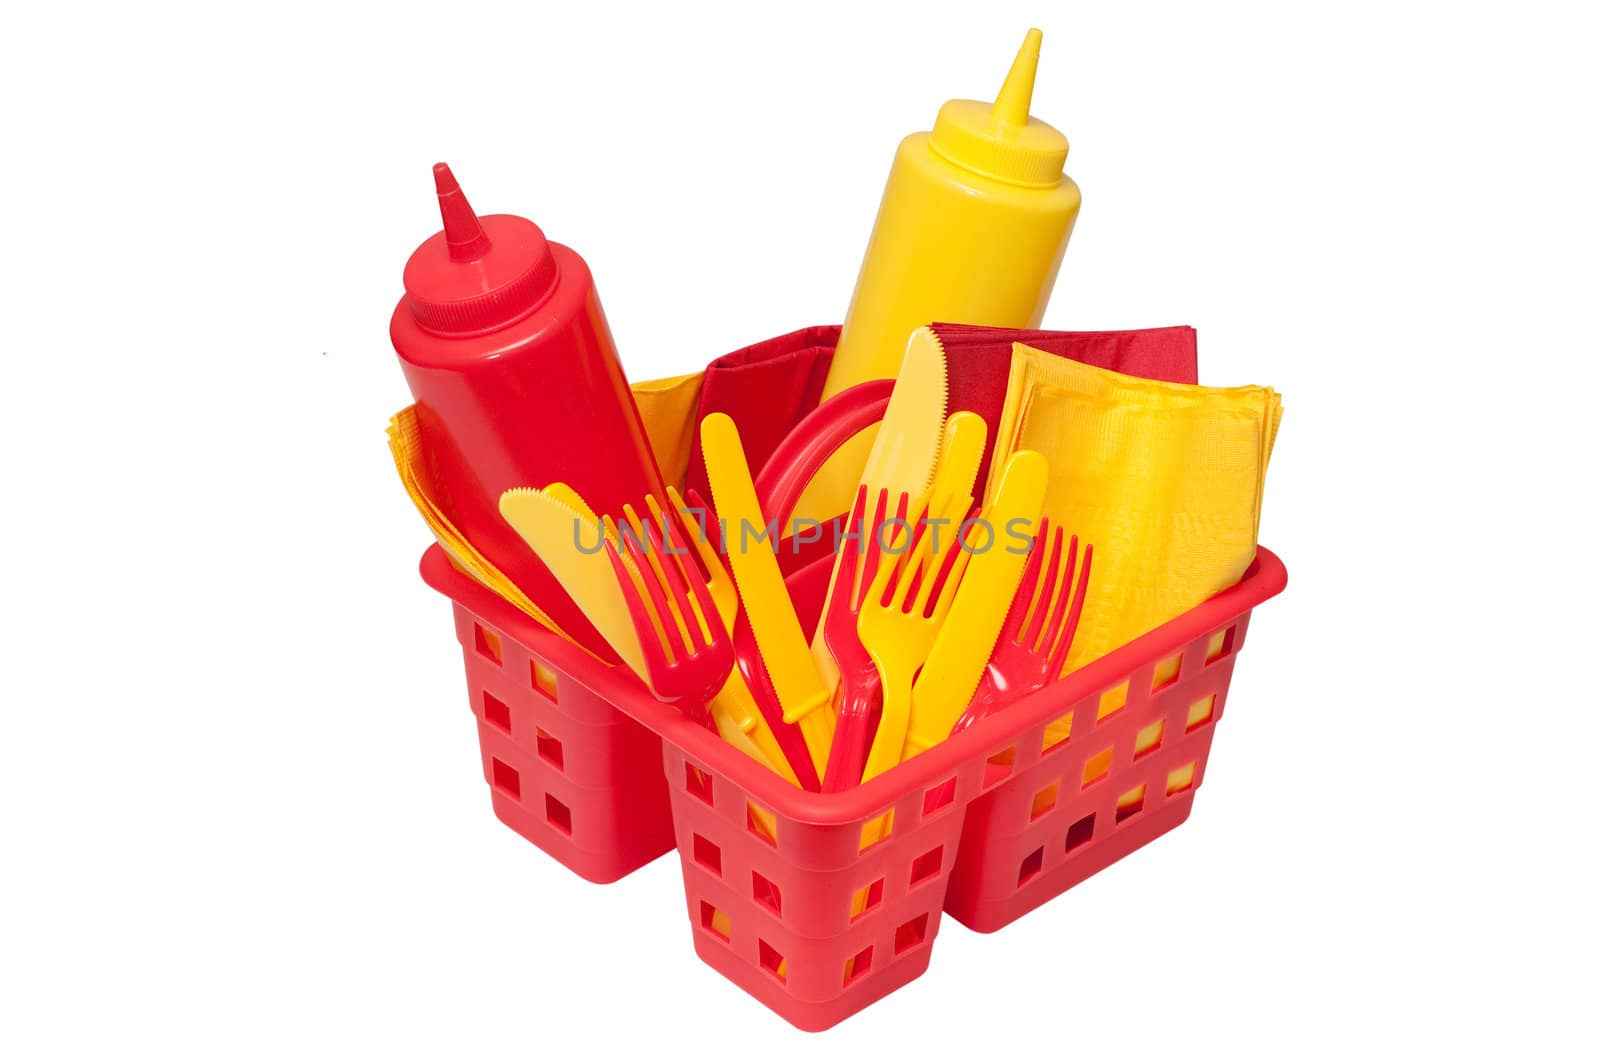 Ketchup, mustard, forks, knives, and napkins in basket. 